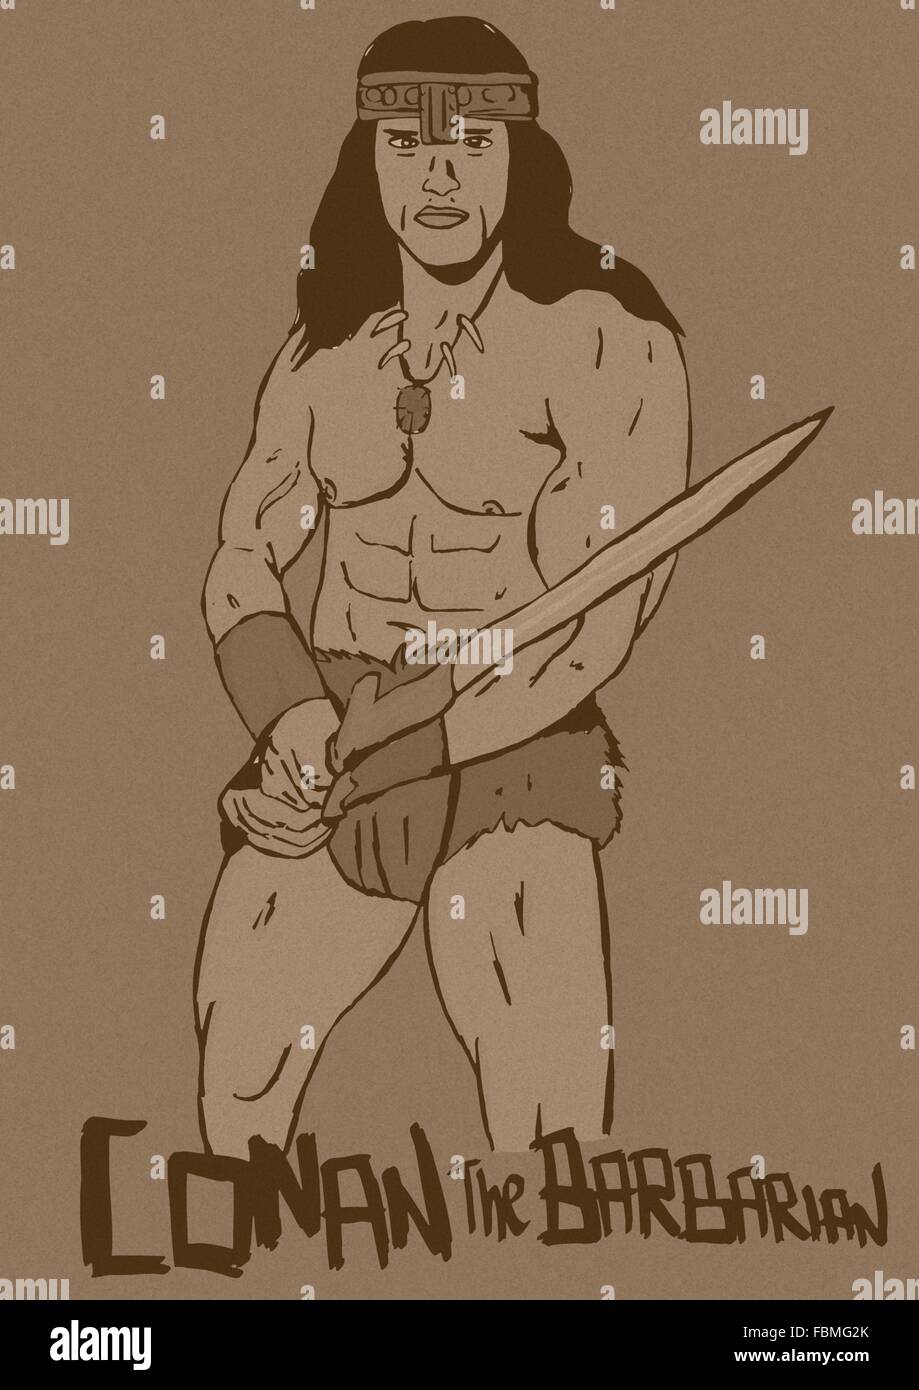 Conan the barbarian vintage Stock Photo